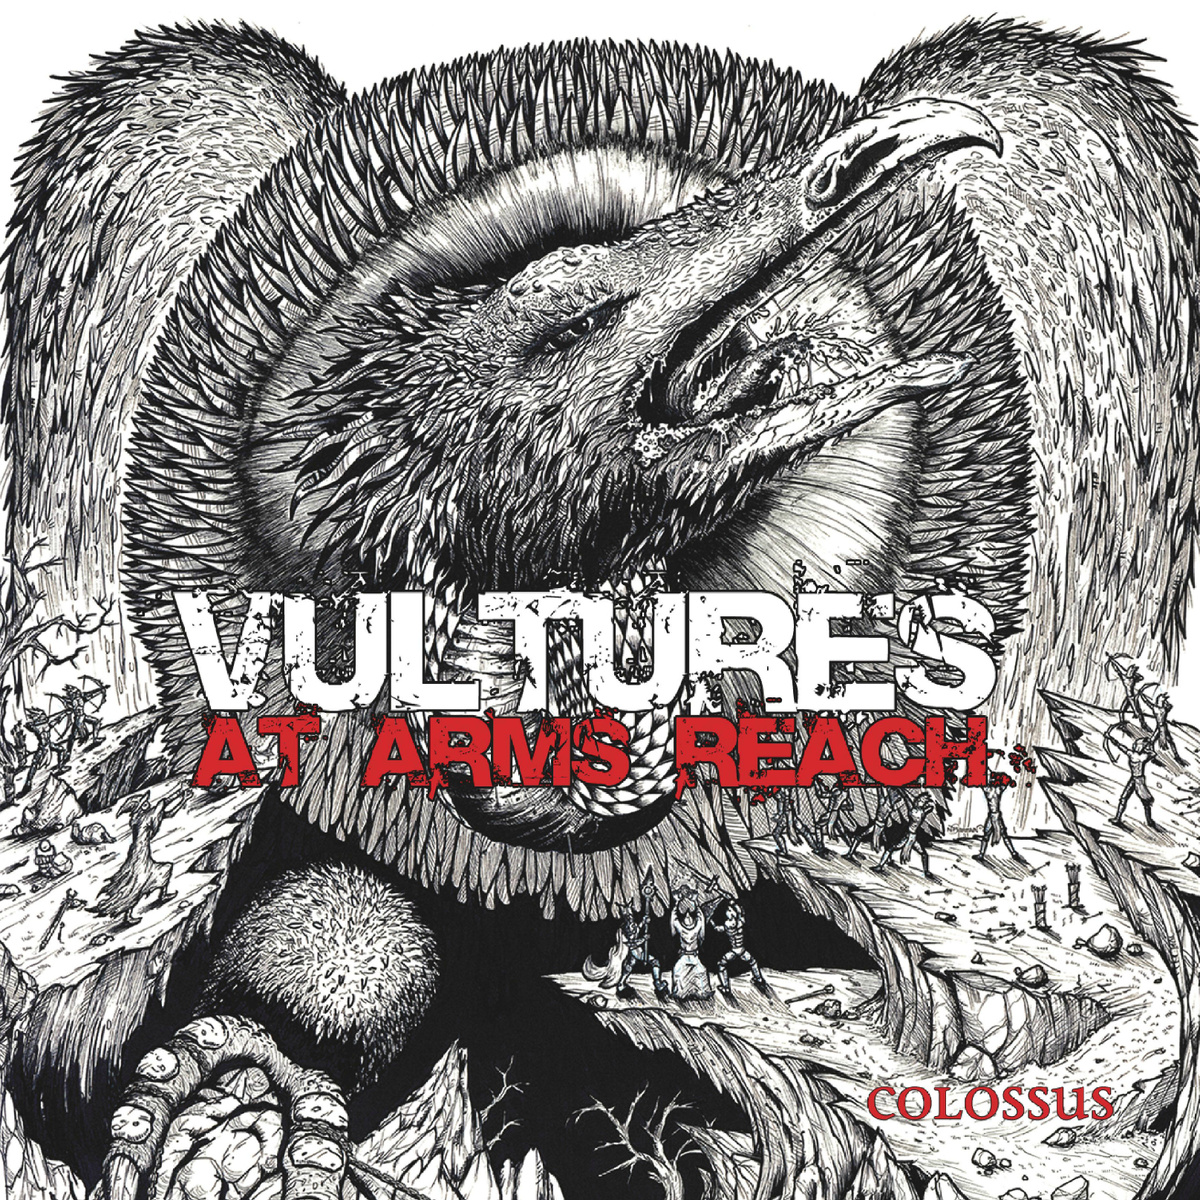 Vultures album. Vultures альбом. Альбом Vultures 1. Логотип альбома Vultures. Vultures 1 история.